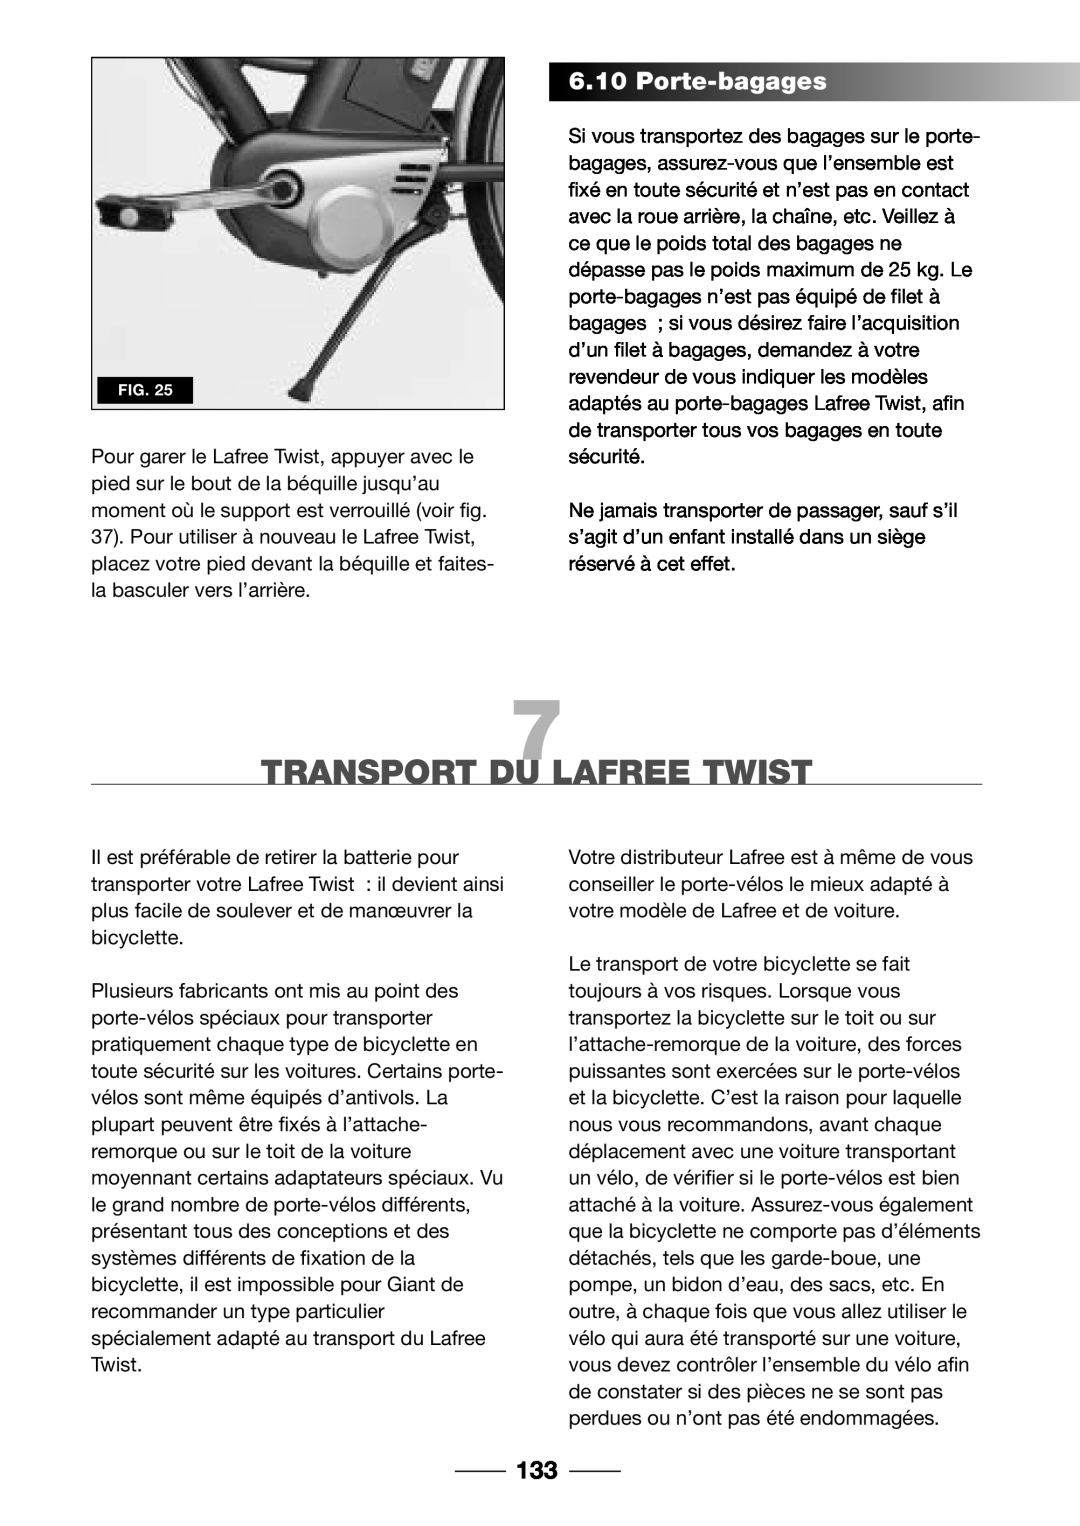 Giant 2002 Motorized Bicycle owner manual Transport Du Lafree Twist, 6.10Porte-bagages 